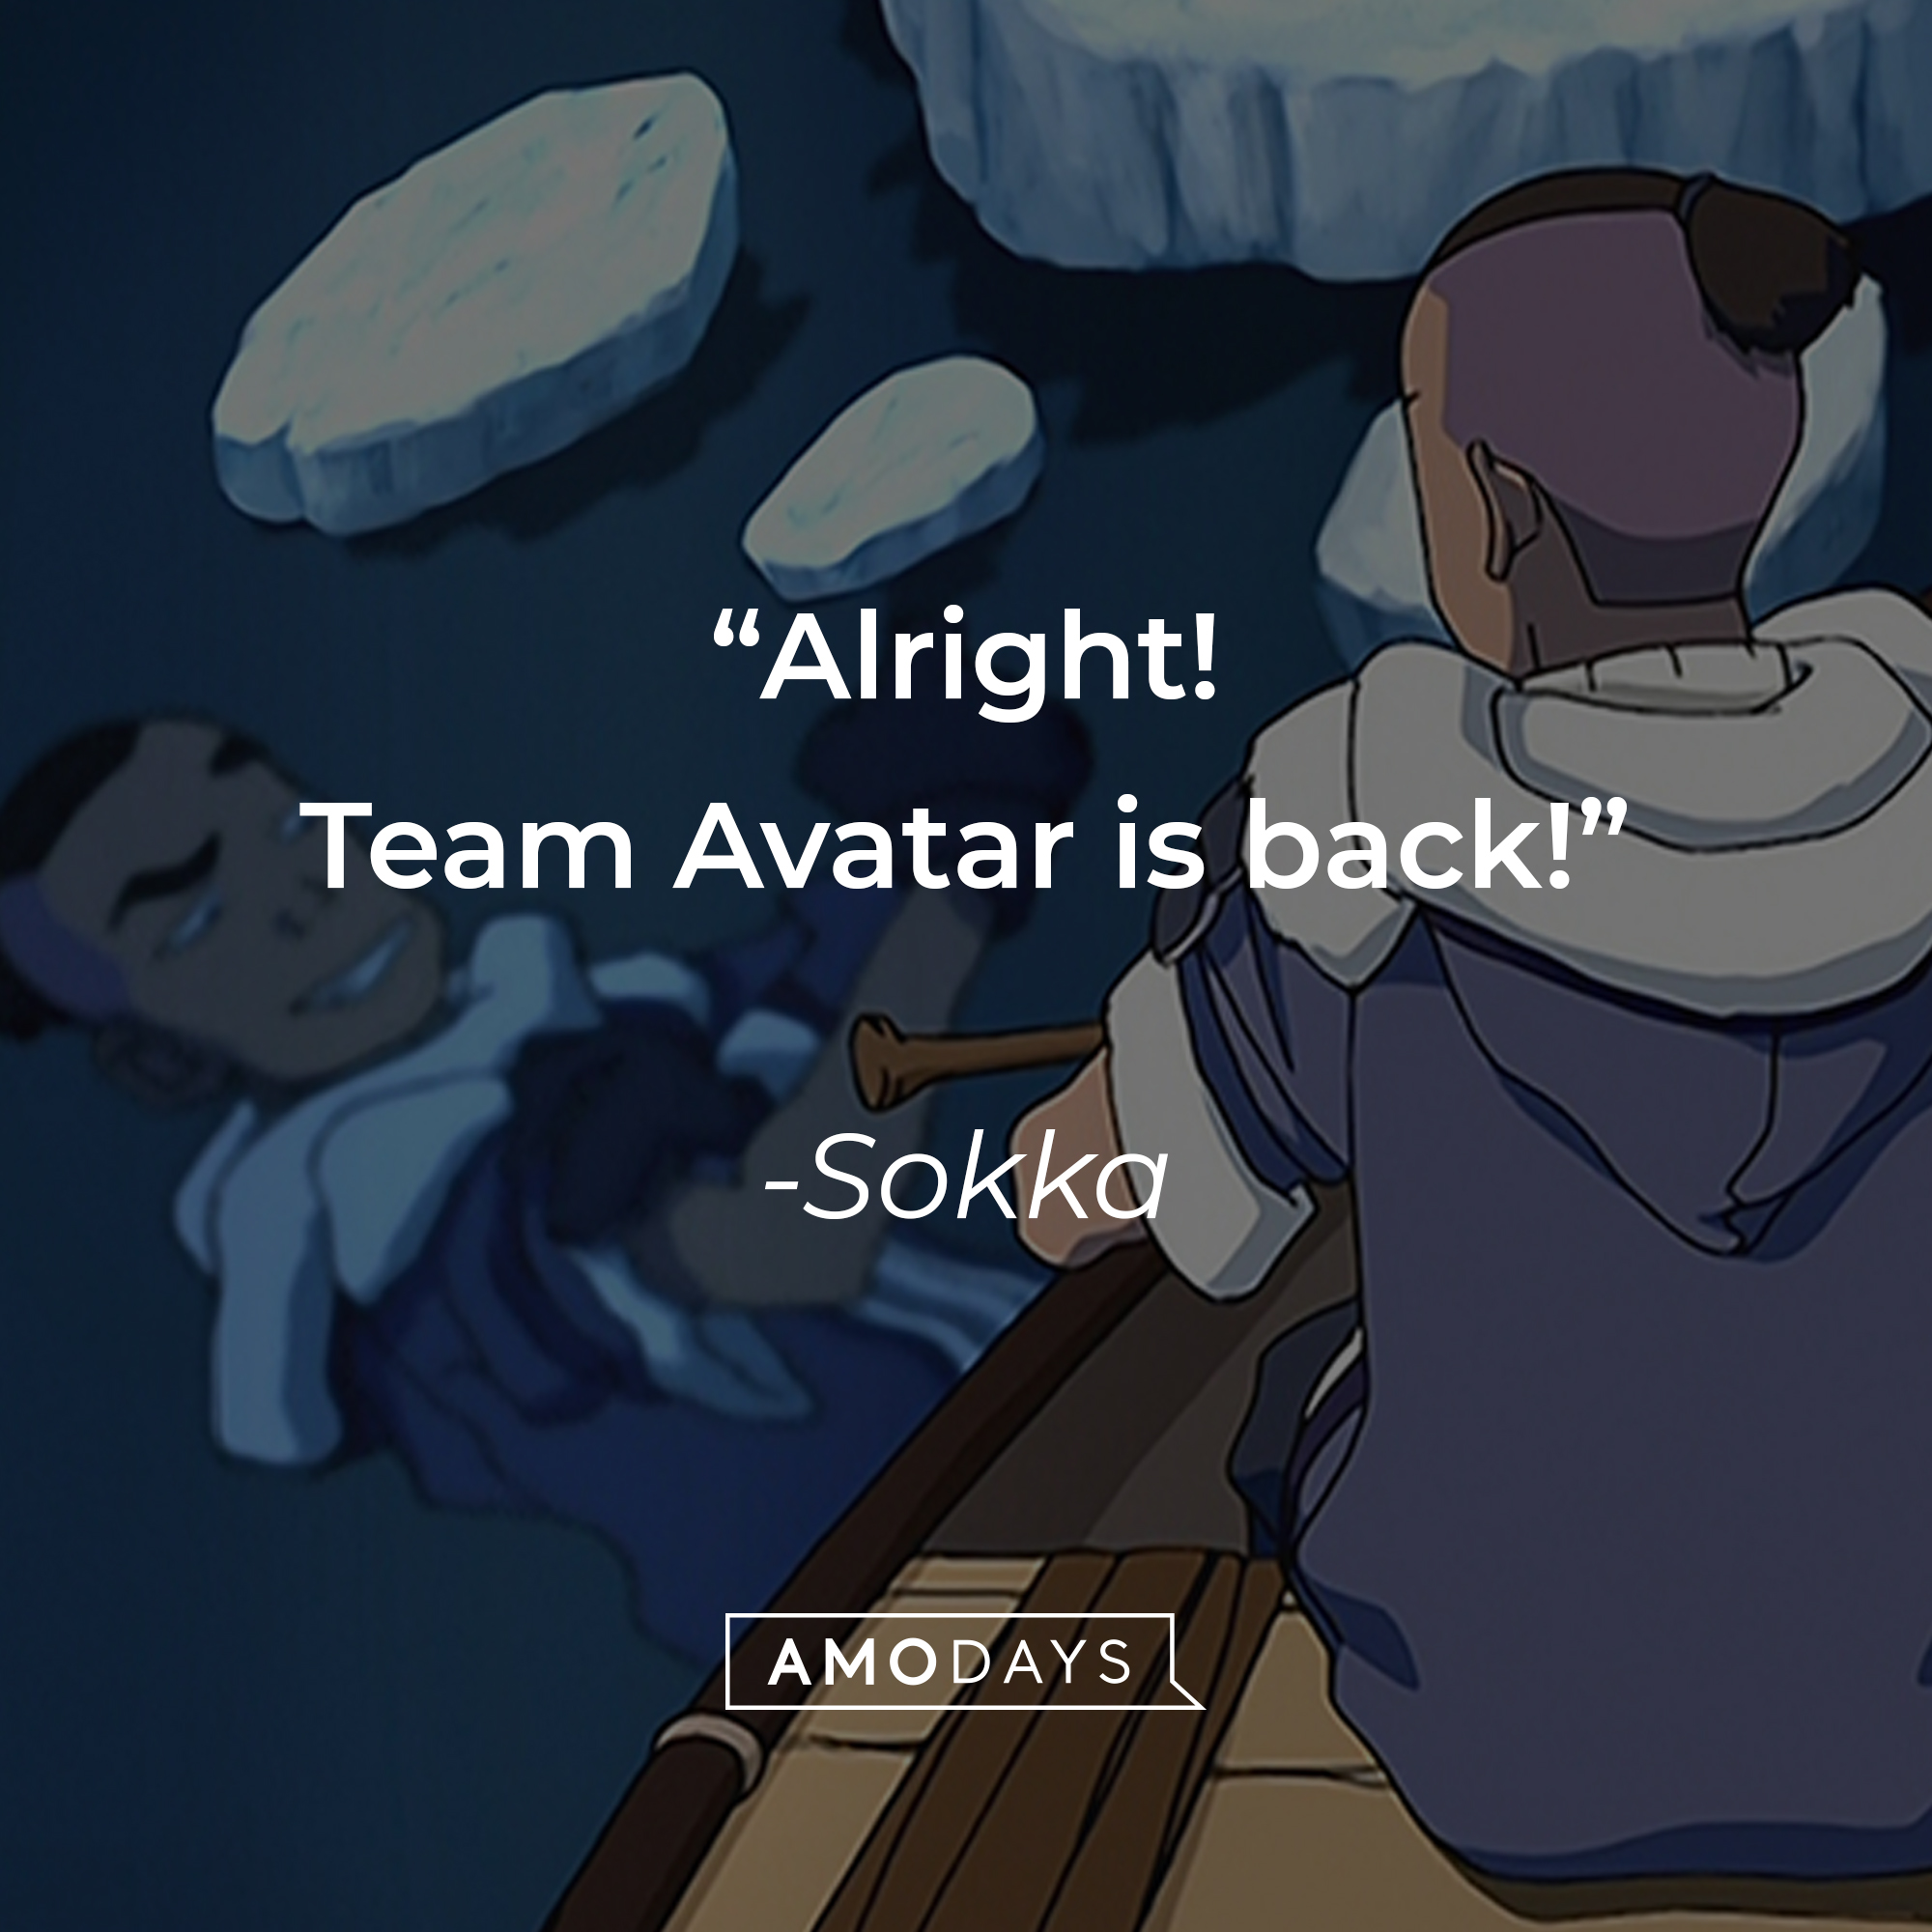 Sokka's quote: "Alright! Team Avatar is back!" | Source: facebook.com/avatarthelastairbender